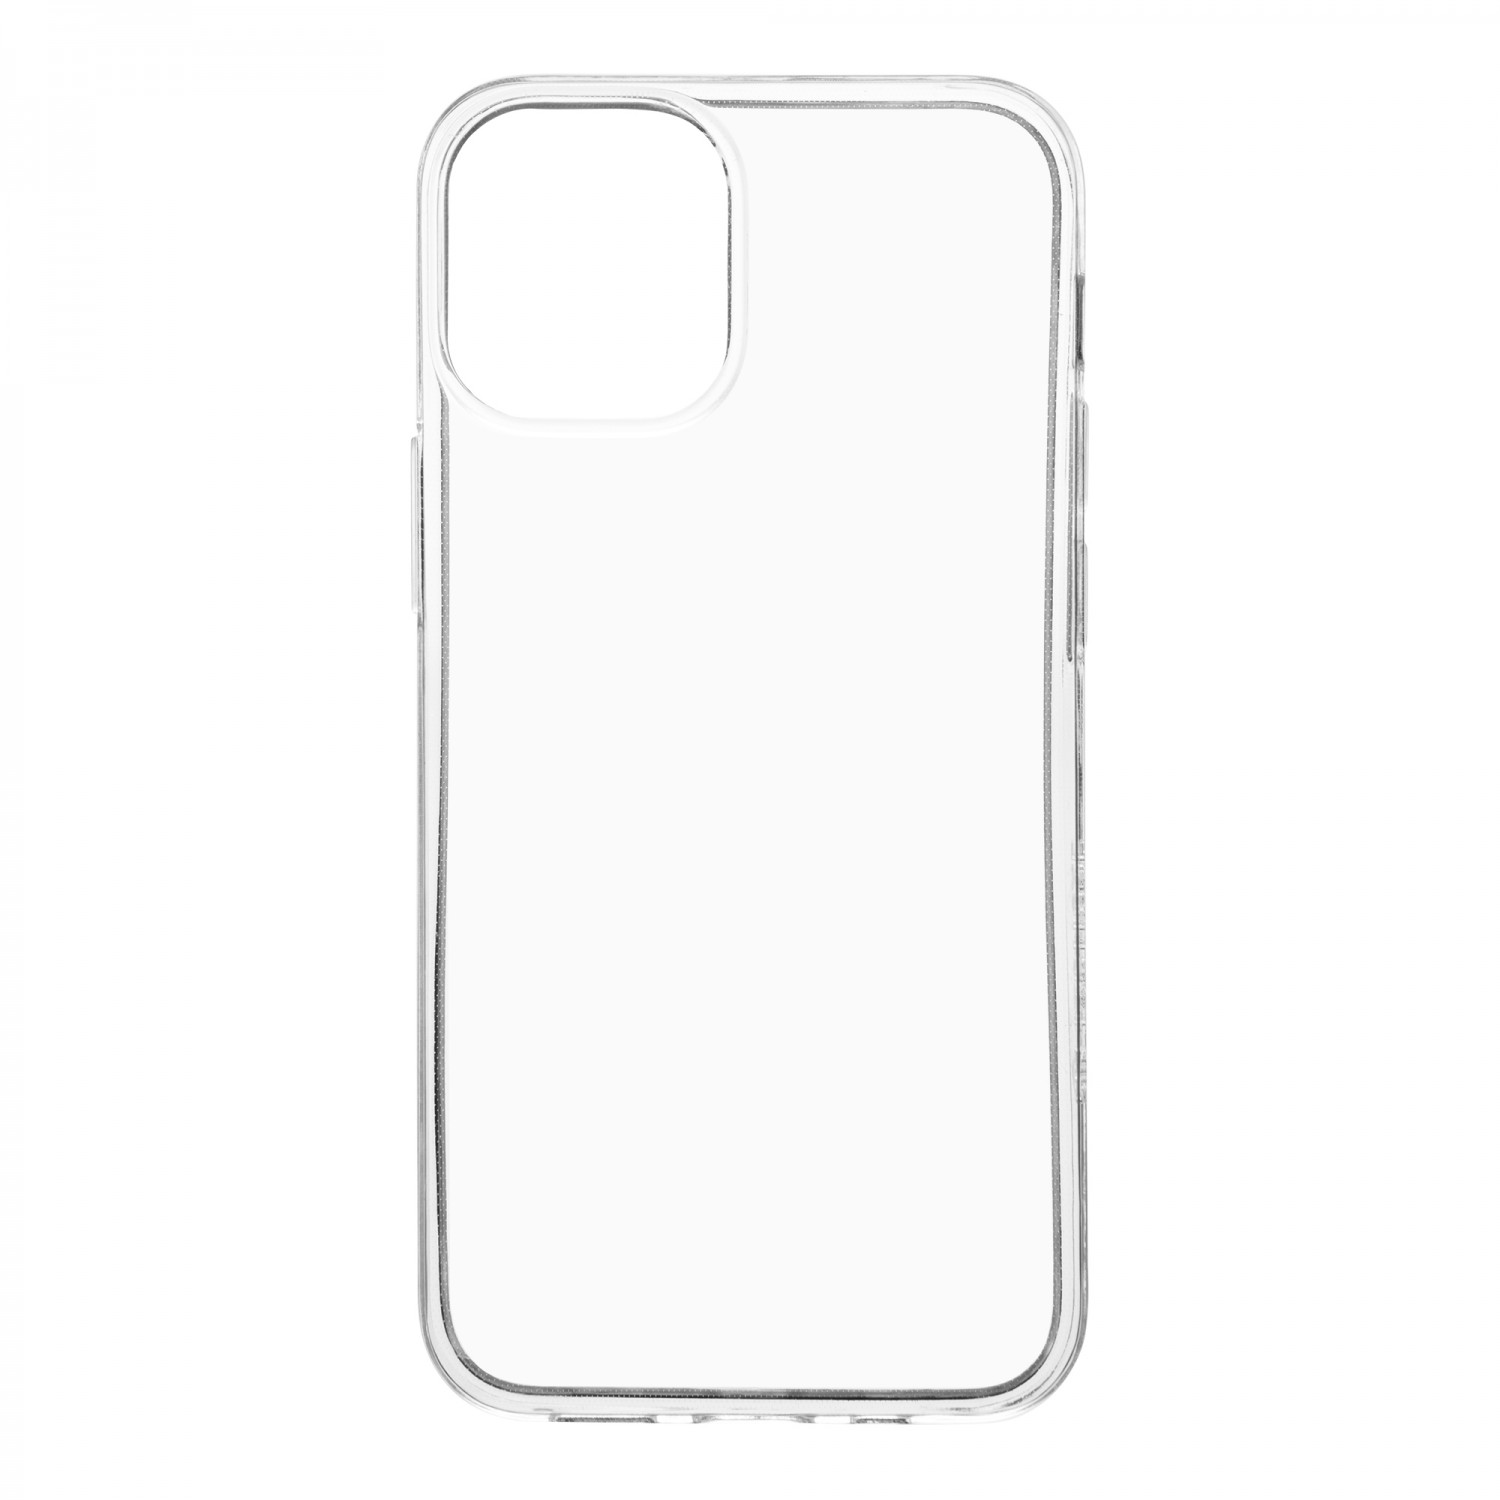 Tactical silikonové pouzdro, obal, kryt Apple iPhone 12 mini transparent 